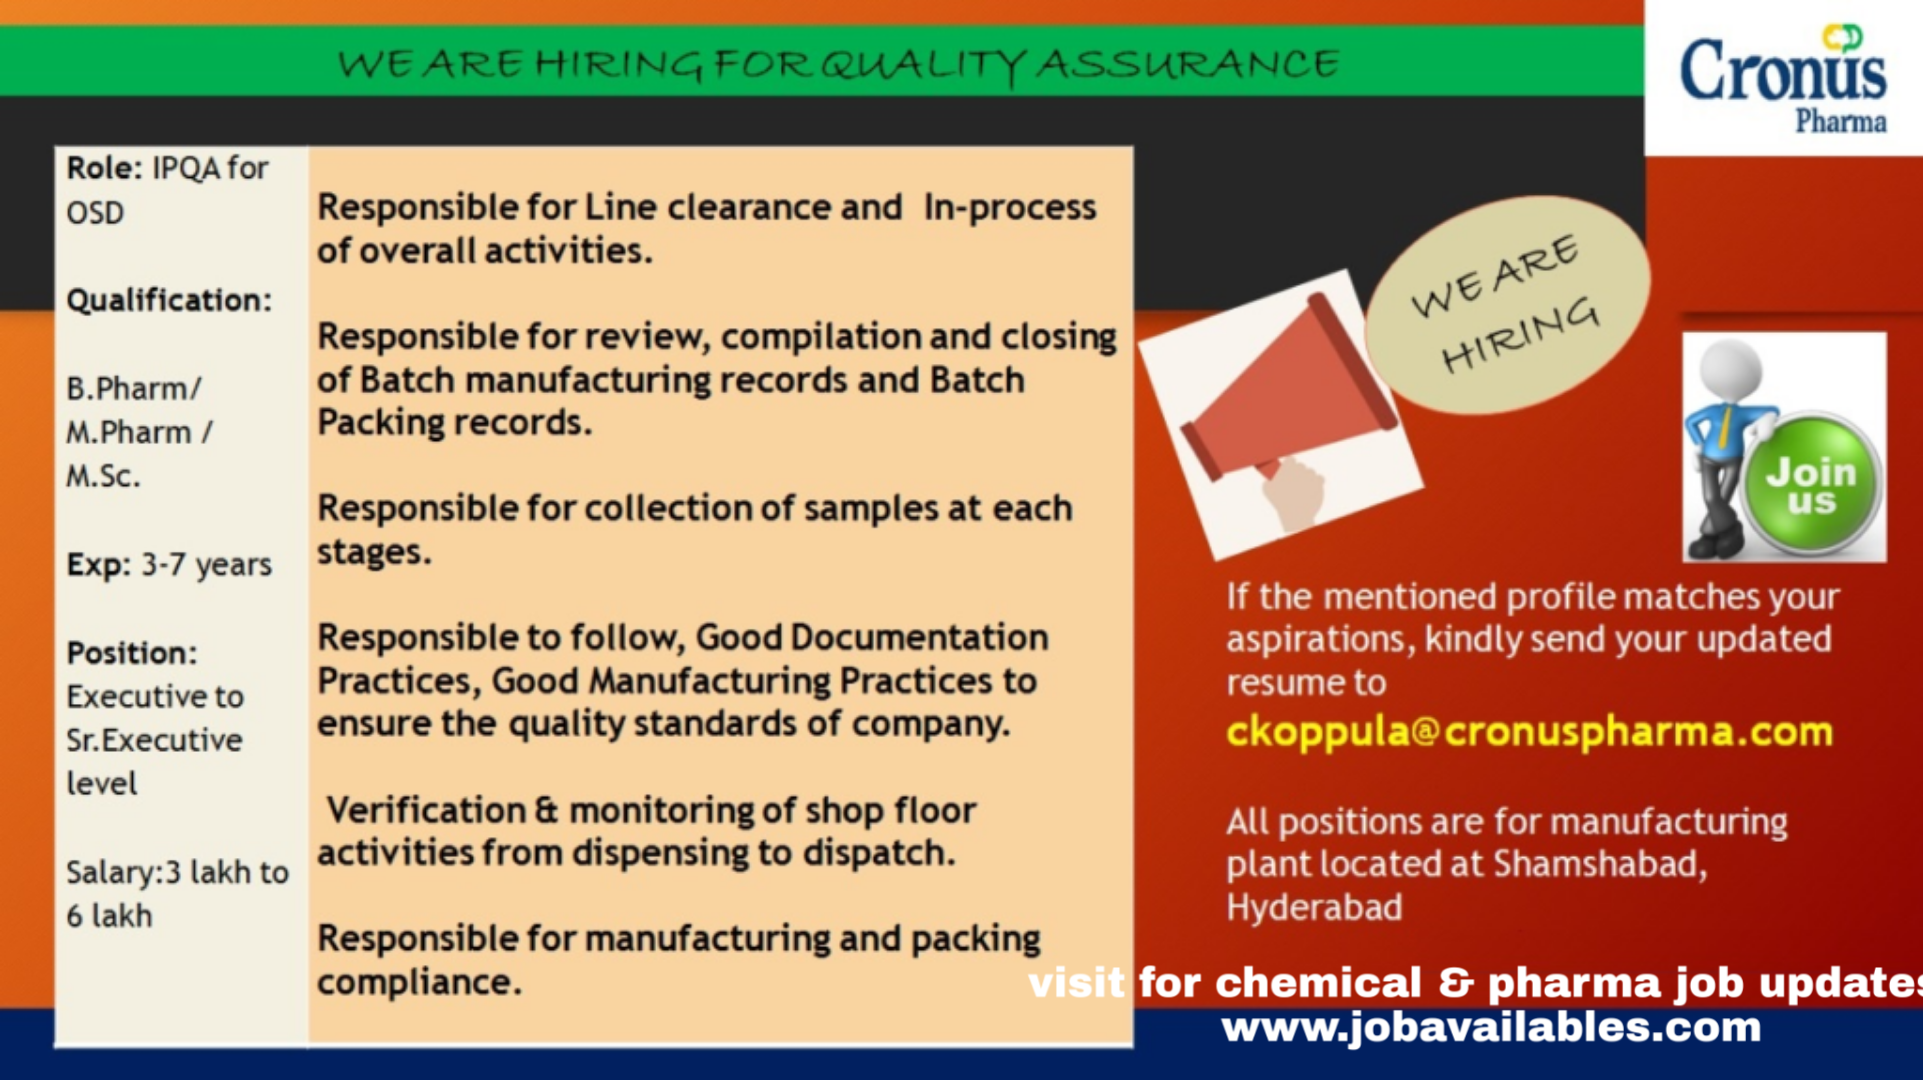 Job Availables, Cronus Pharma Job Opening for B.Pharm/ M.Pharm/ MSc - Quality Assurance